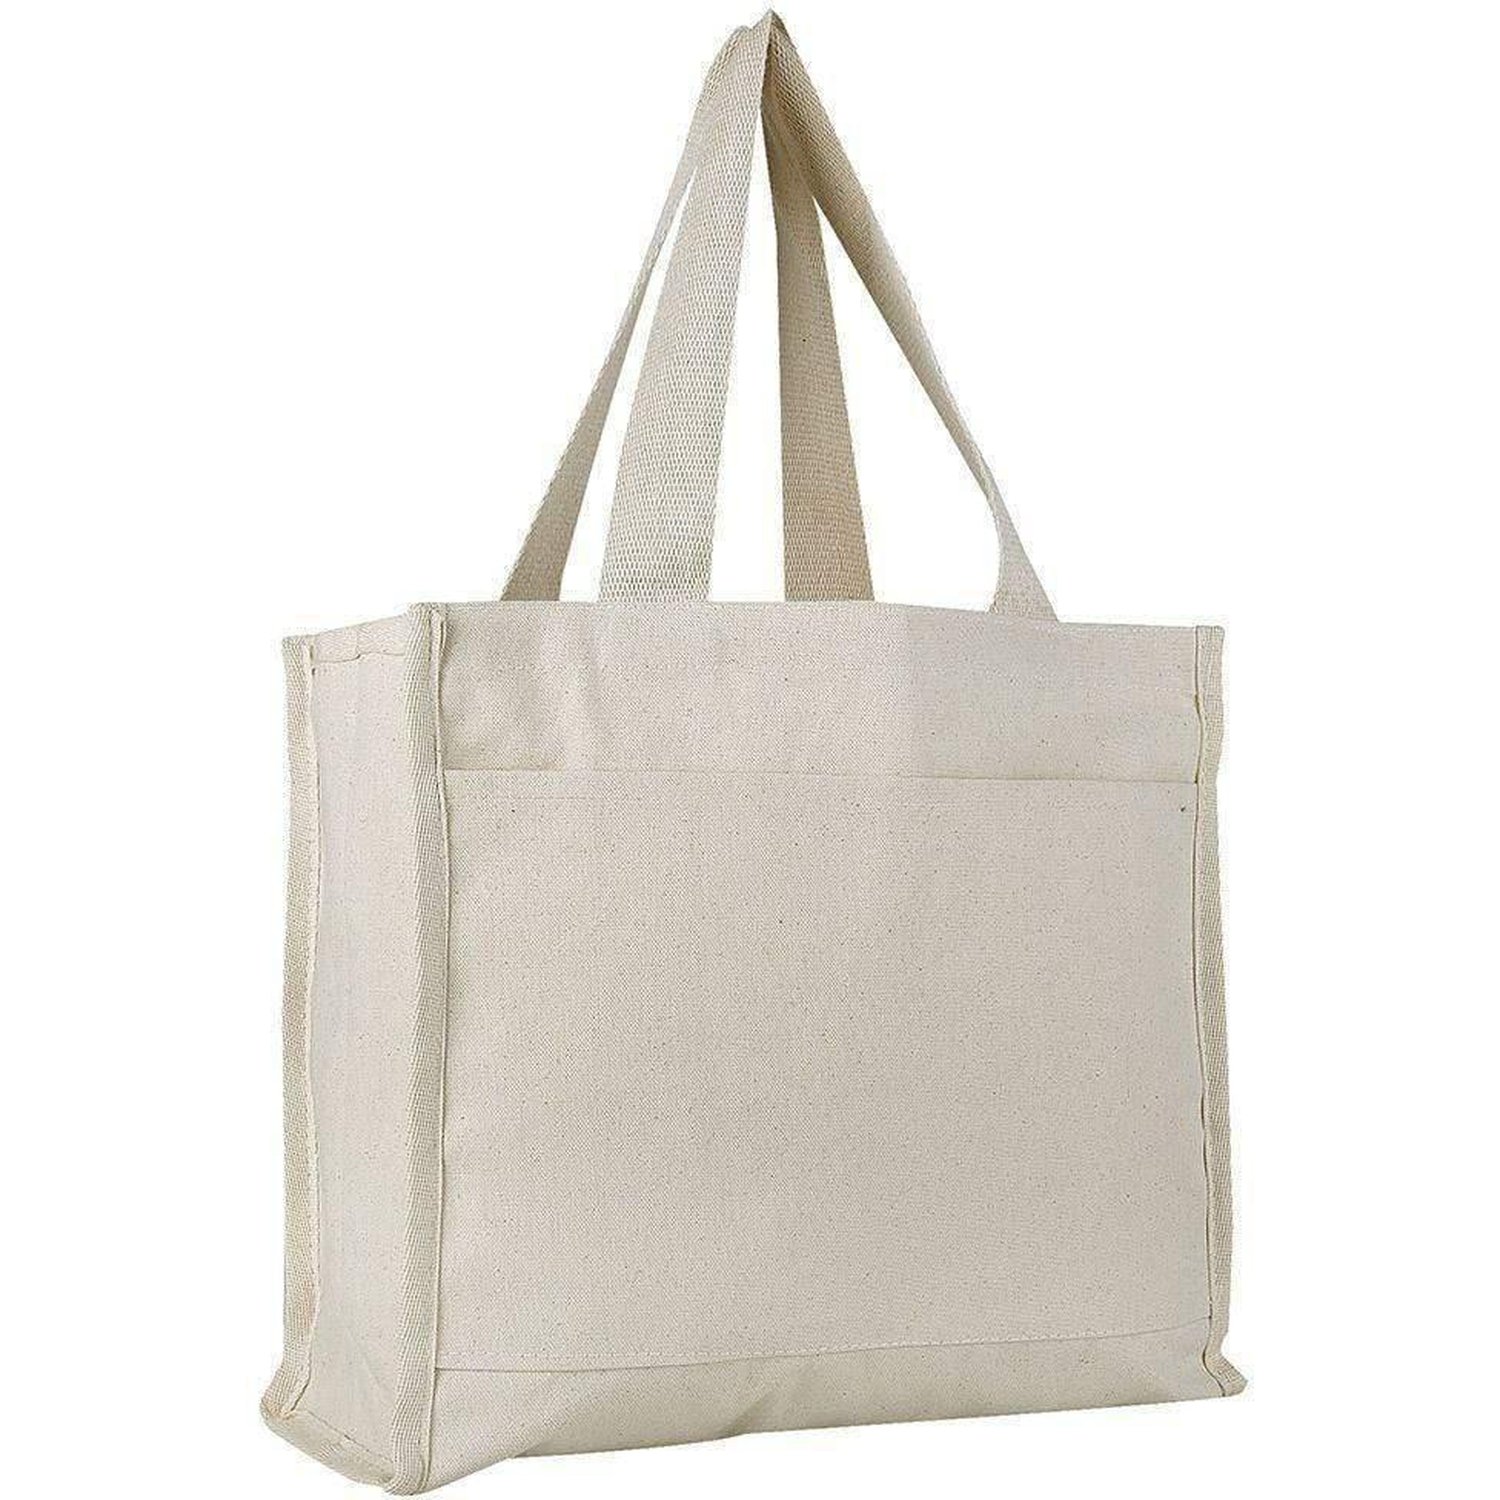 BagzDepot heavy duty blank canvas tote bags in bulk - 12 pack